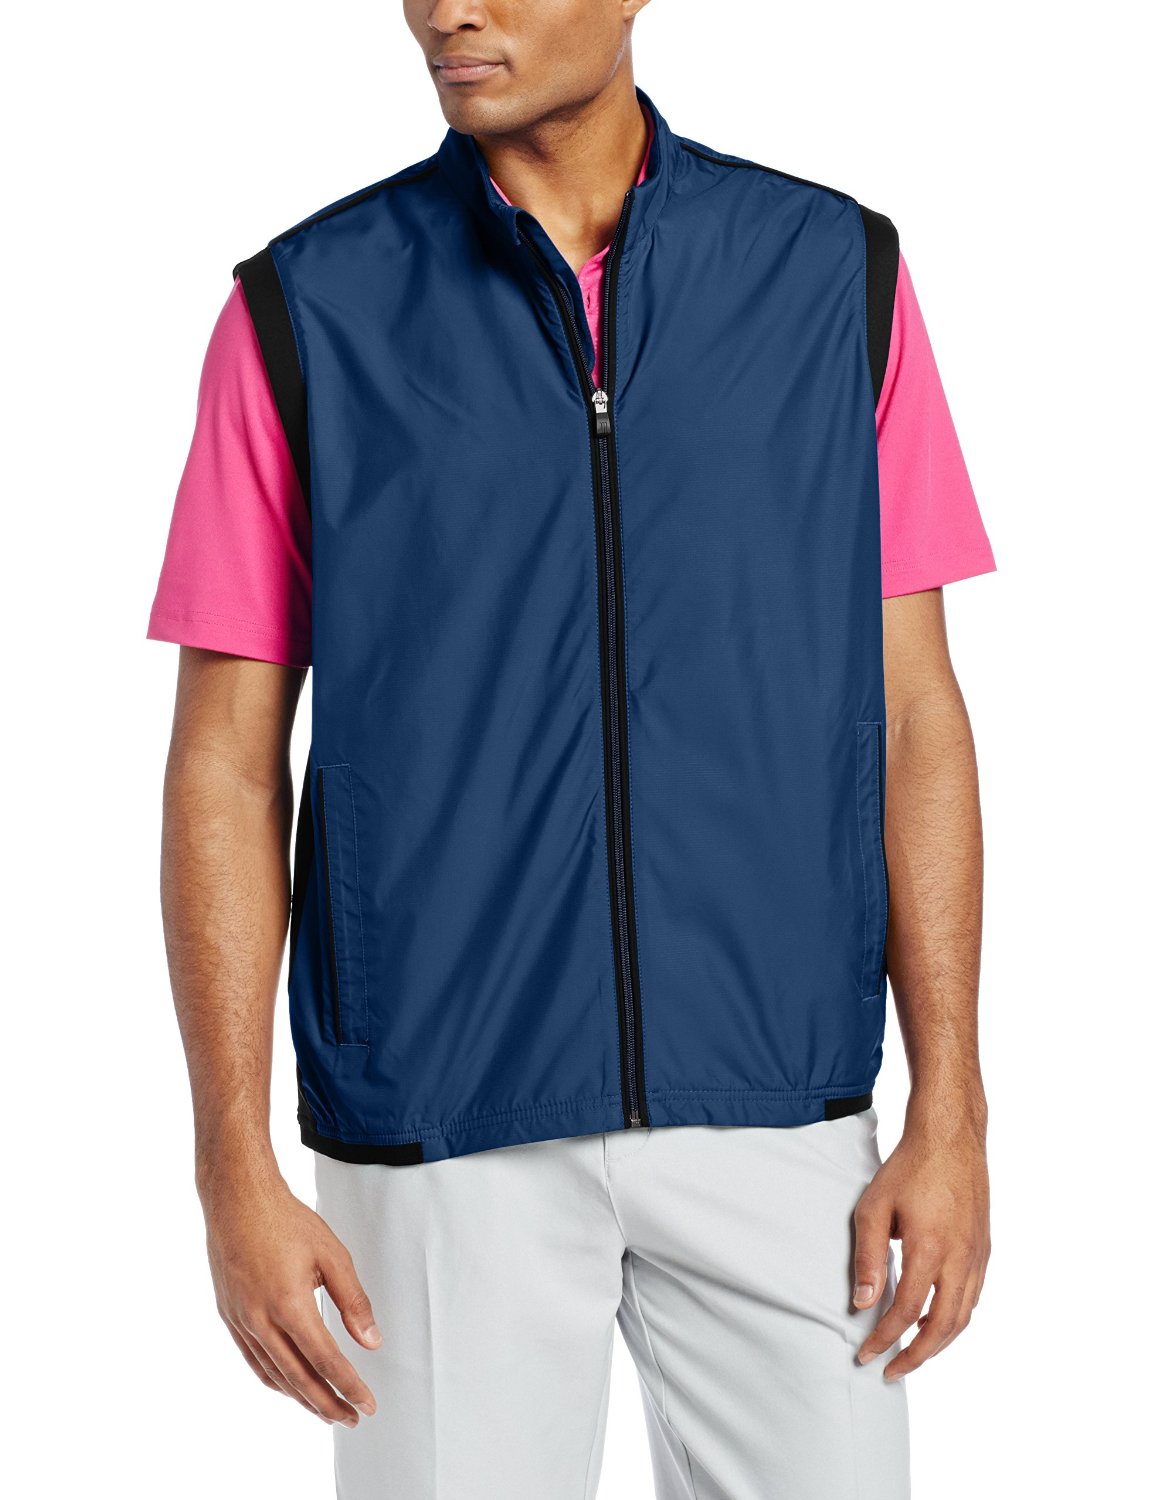 Adidas Climaproof Golf Wind Vests